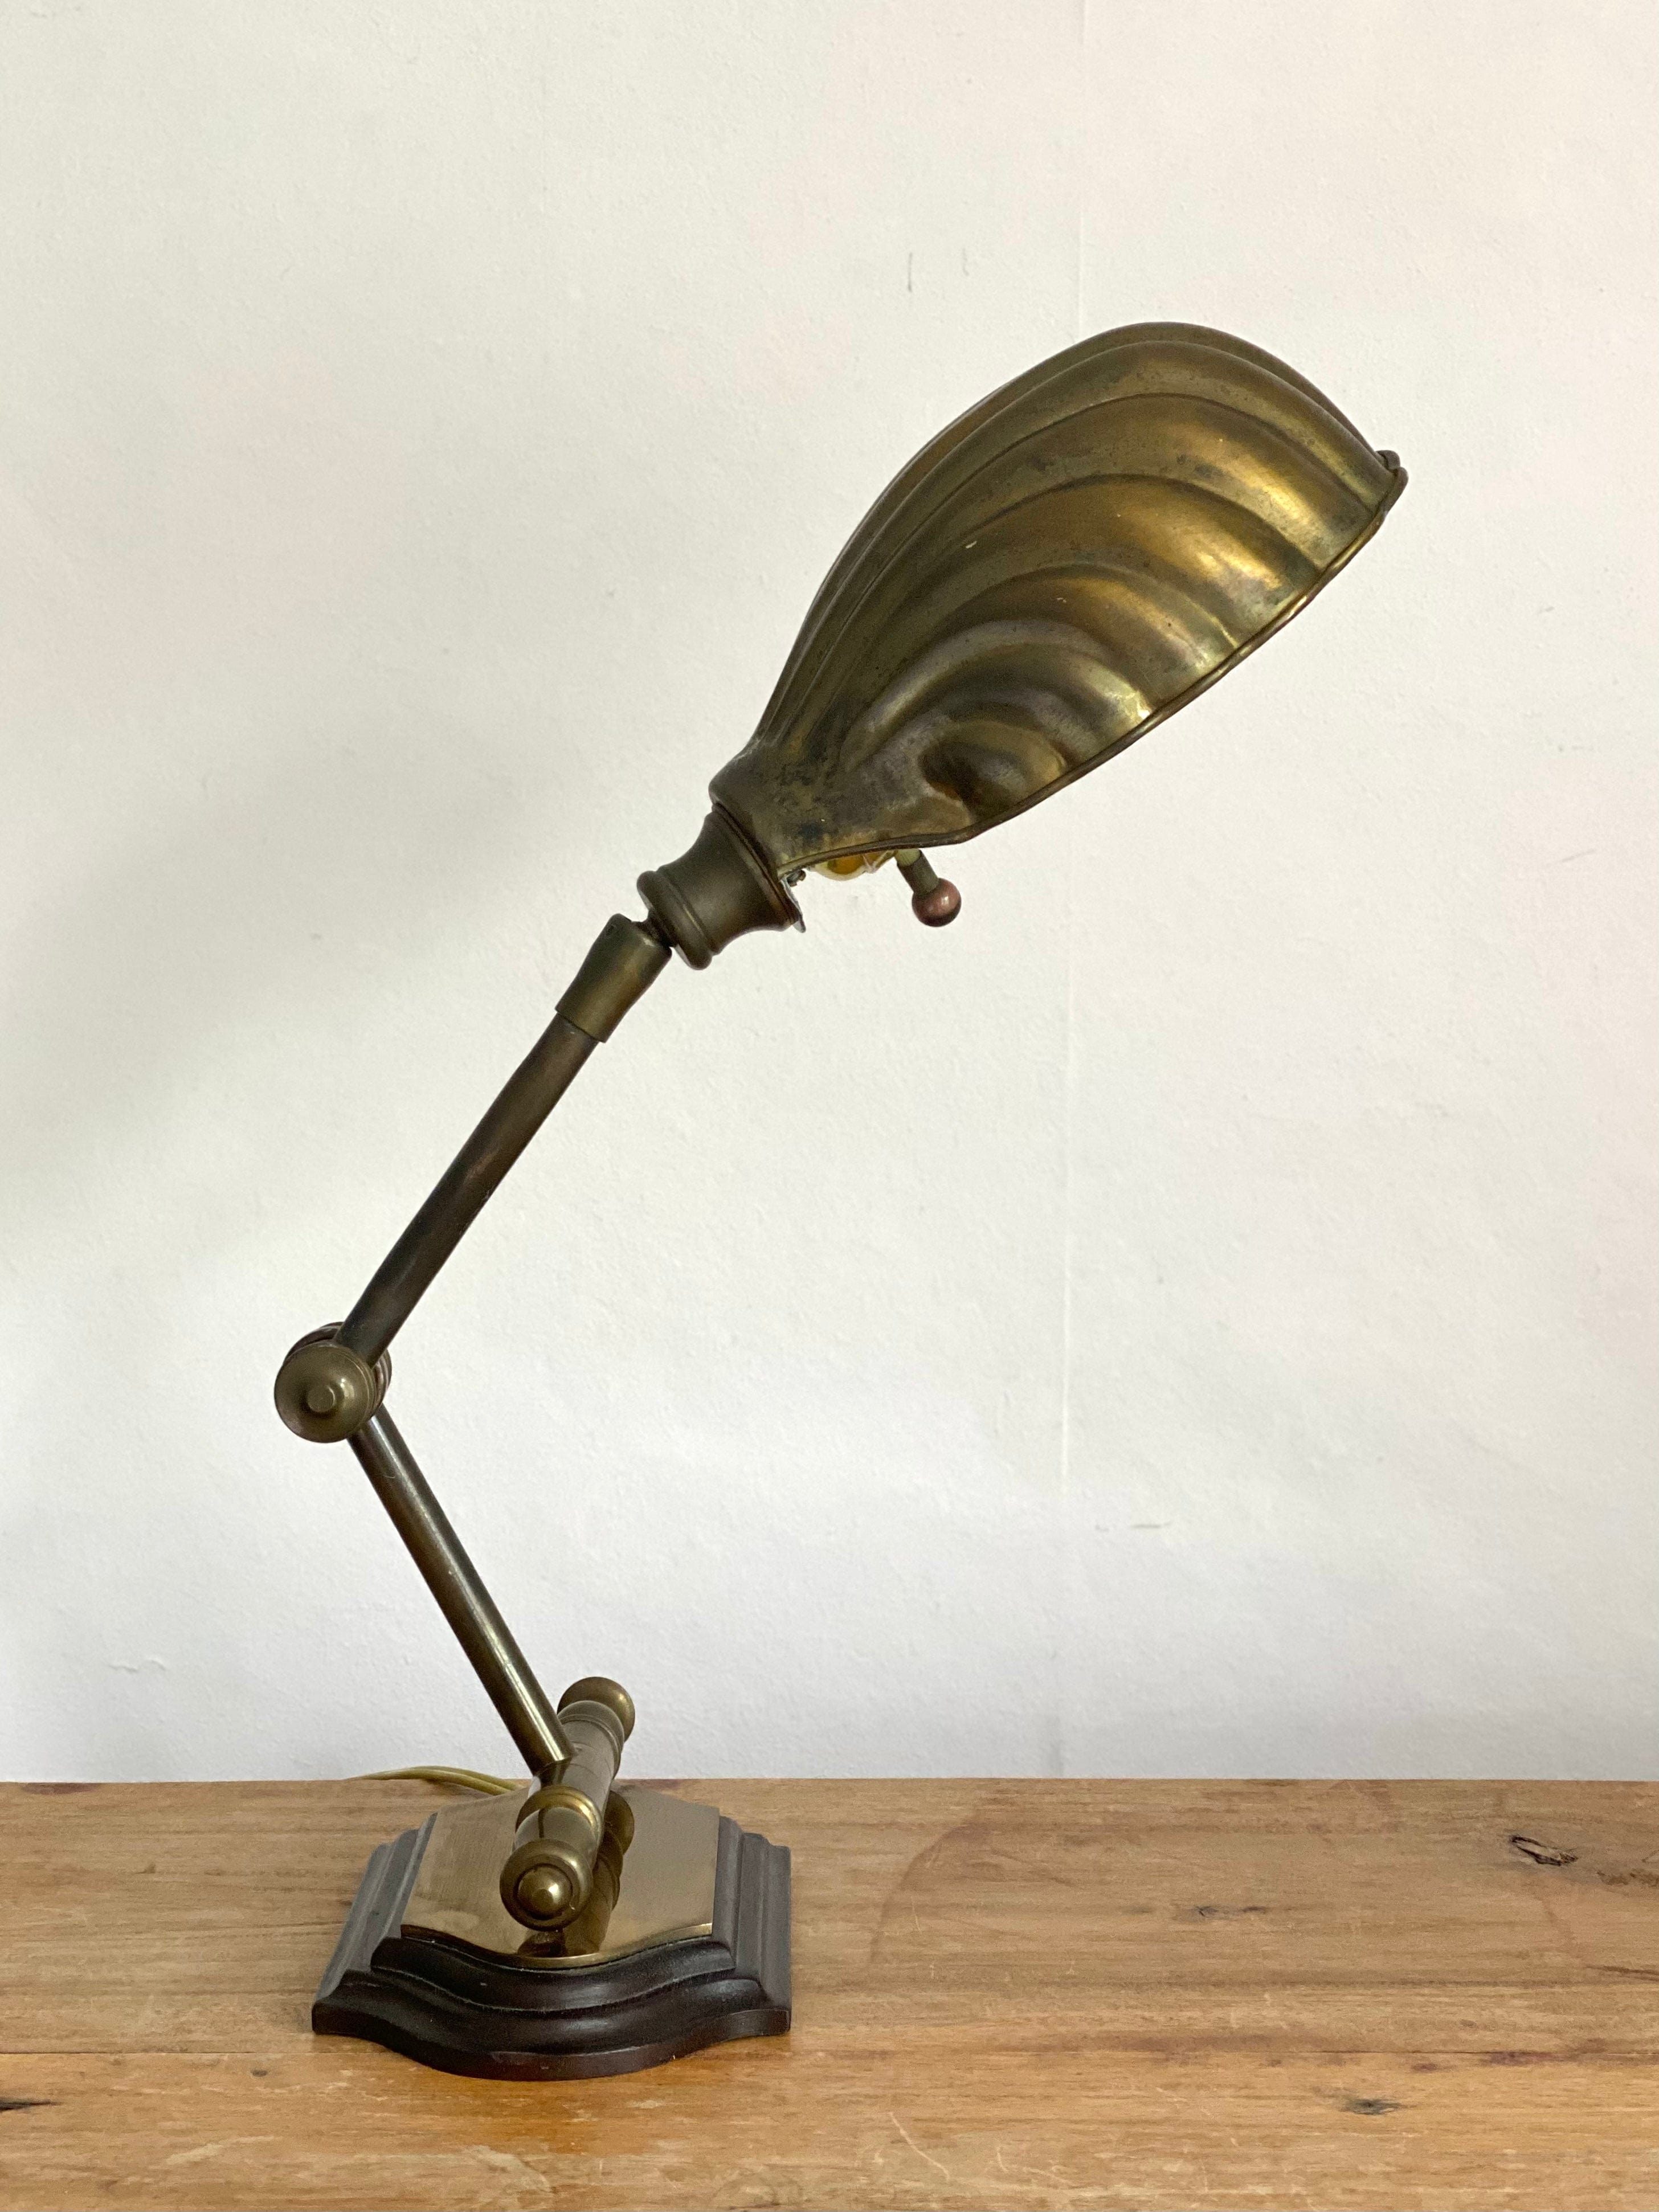 Kept London Stock *Shell adjustable brass lamp